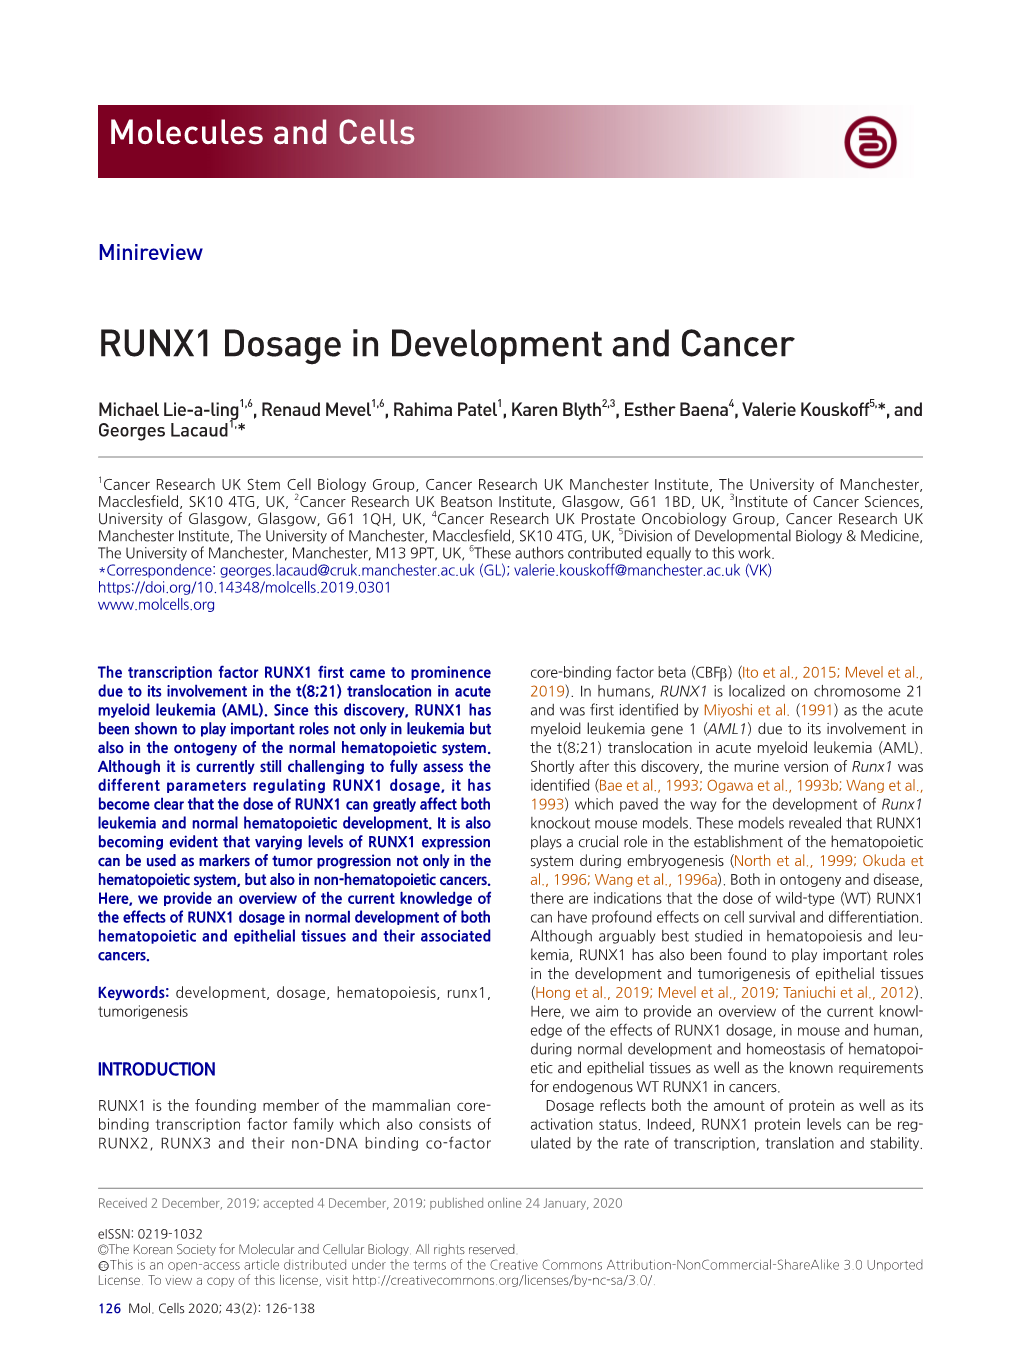 RUNX1 Dosage in Development and Cancer